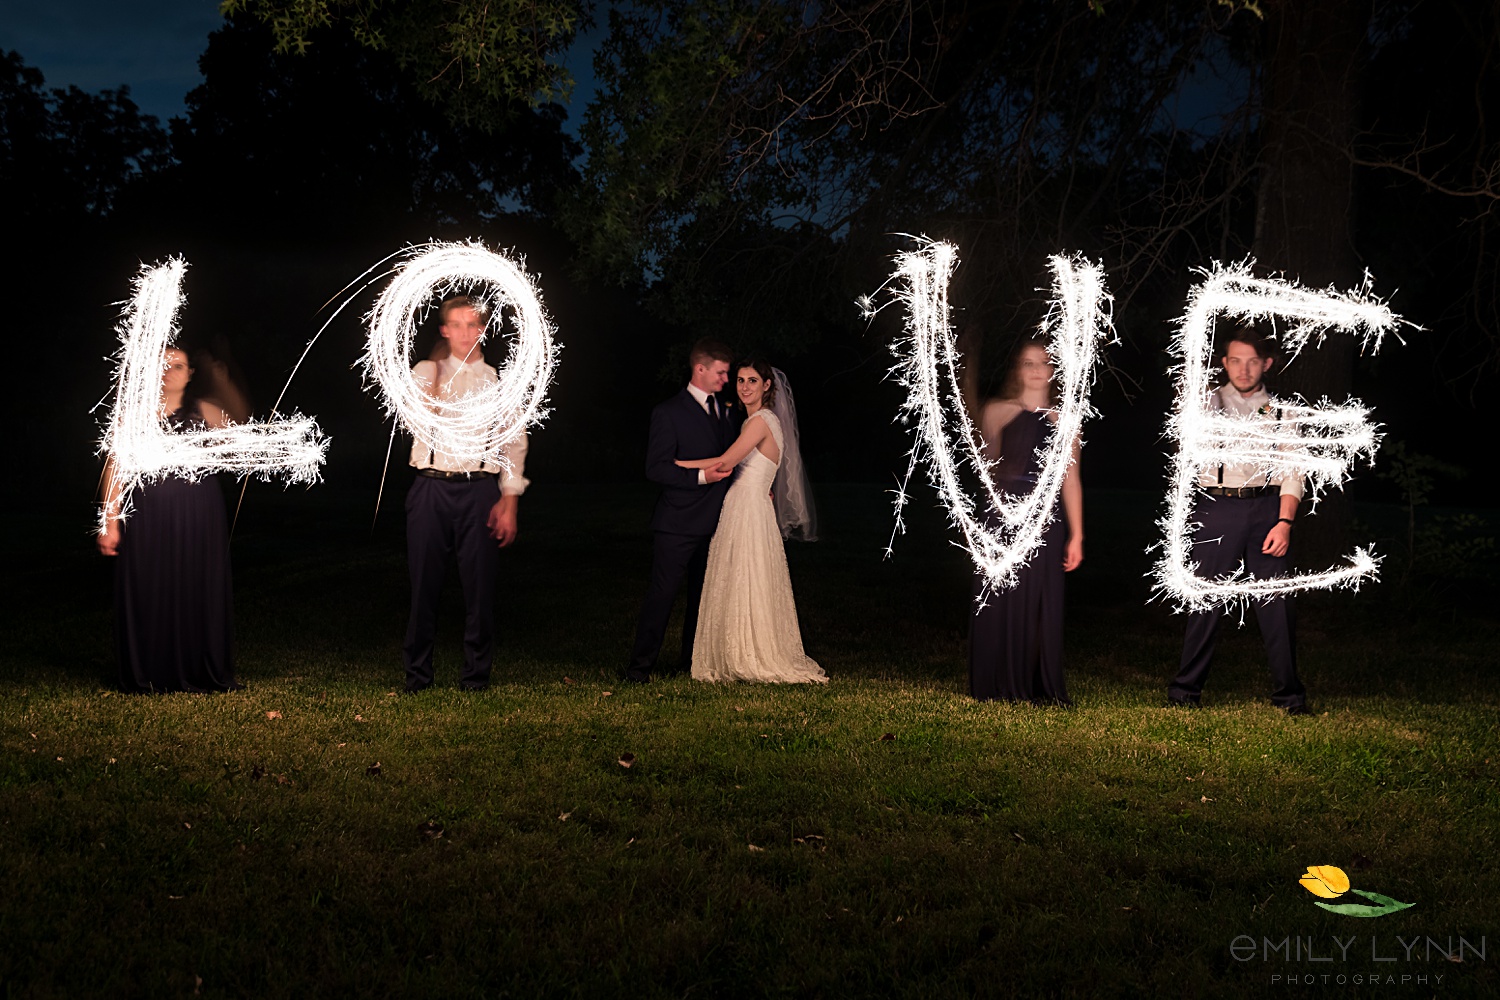 Posed fireworks LOVE photo. Wedding-Photos-at-Enchanted-Acres-KC-Wedding-Photographer-Emily-Lynn-Photography.